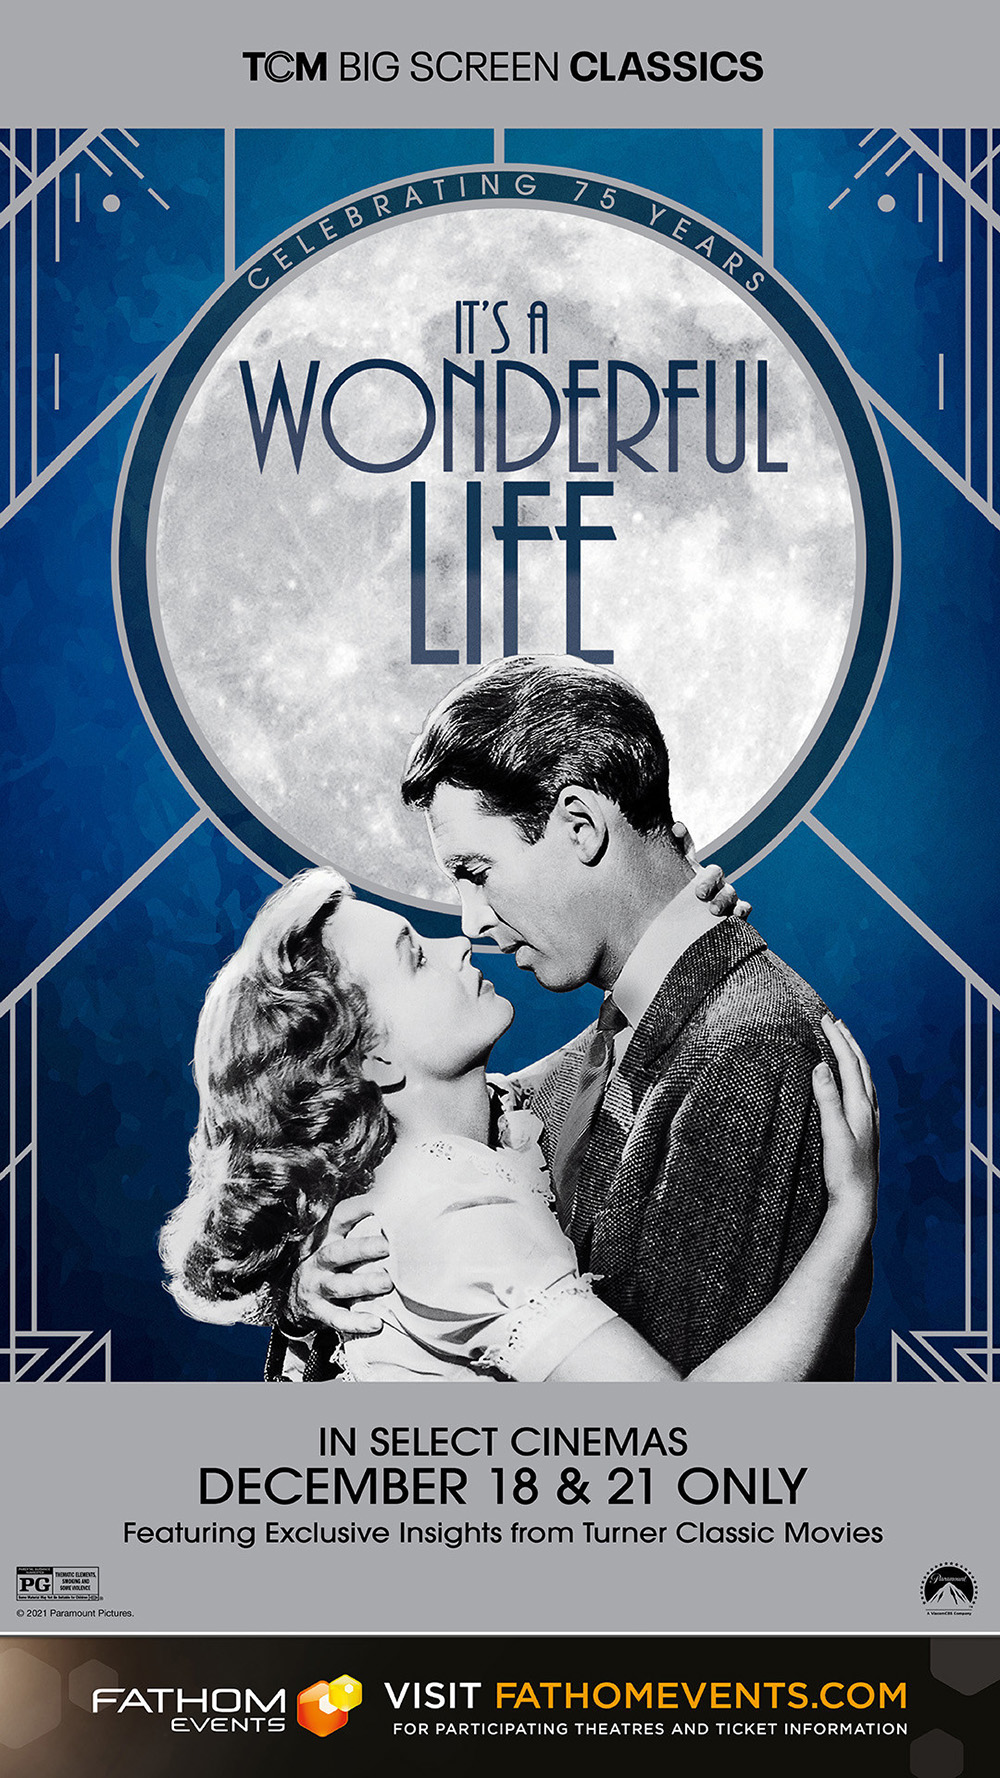 It's A Wonderful Life - 75th Anniversary Screening from Fathom Events